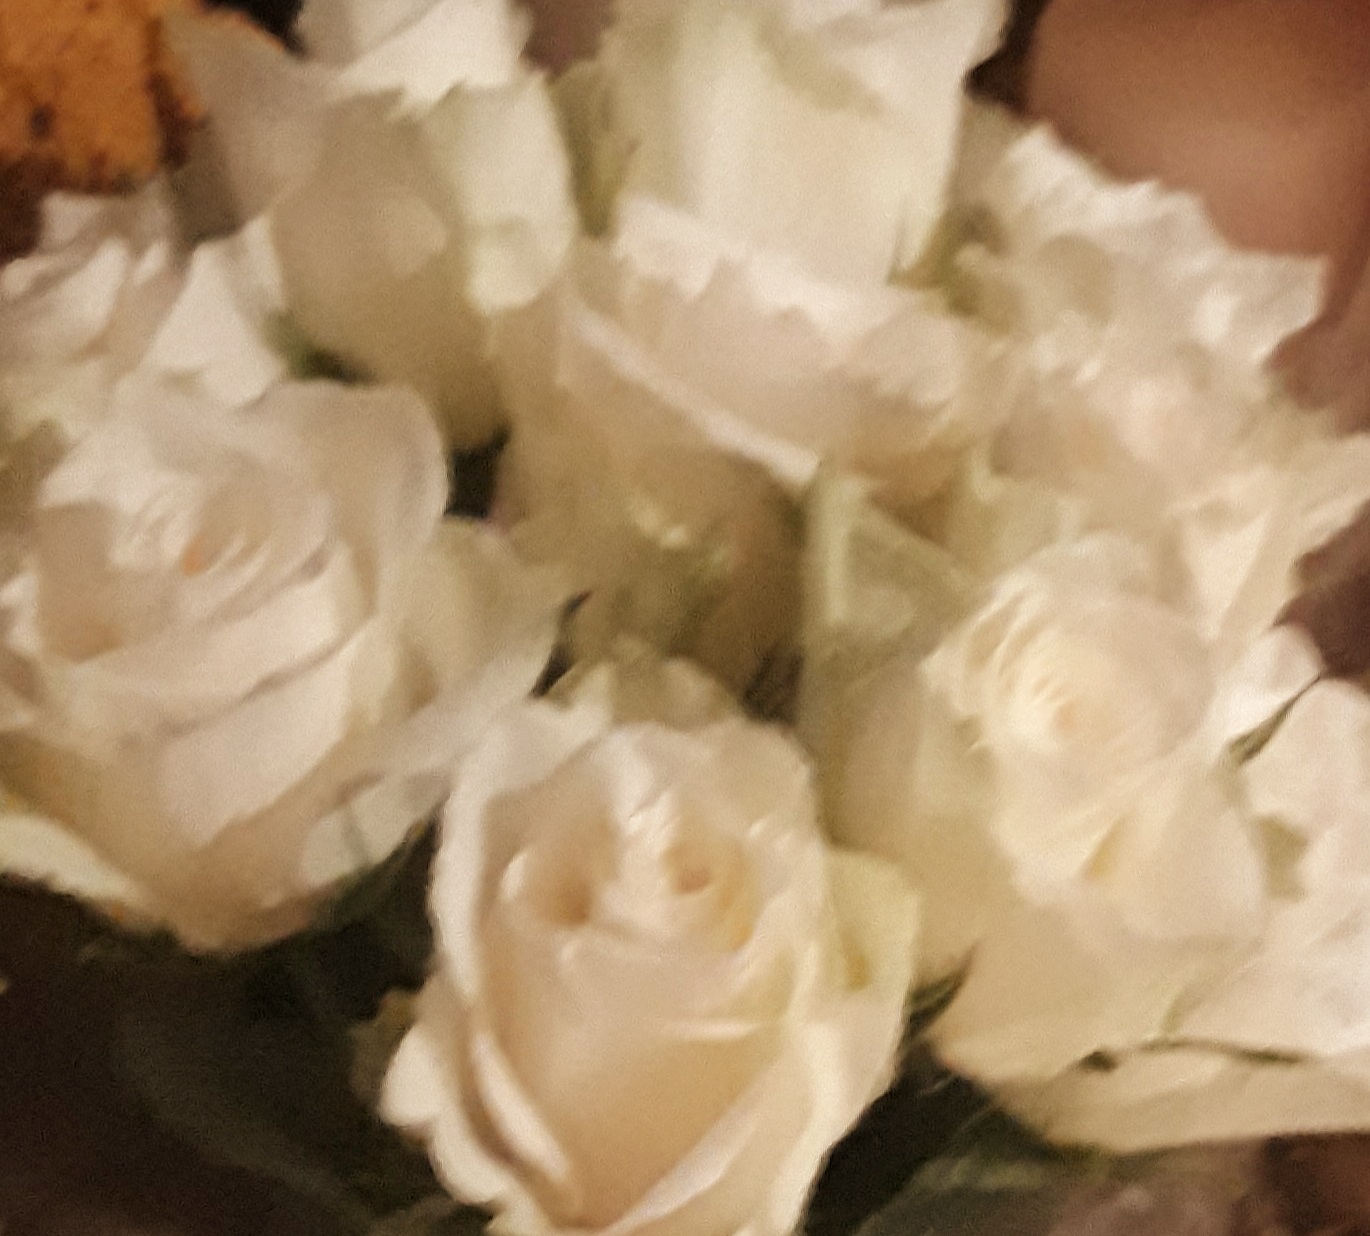 Cream rose buds